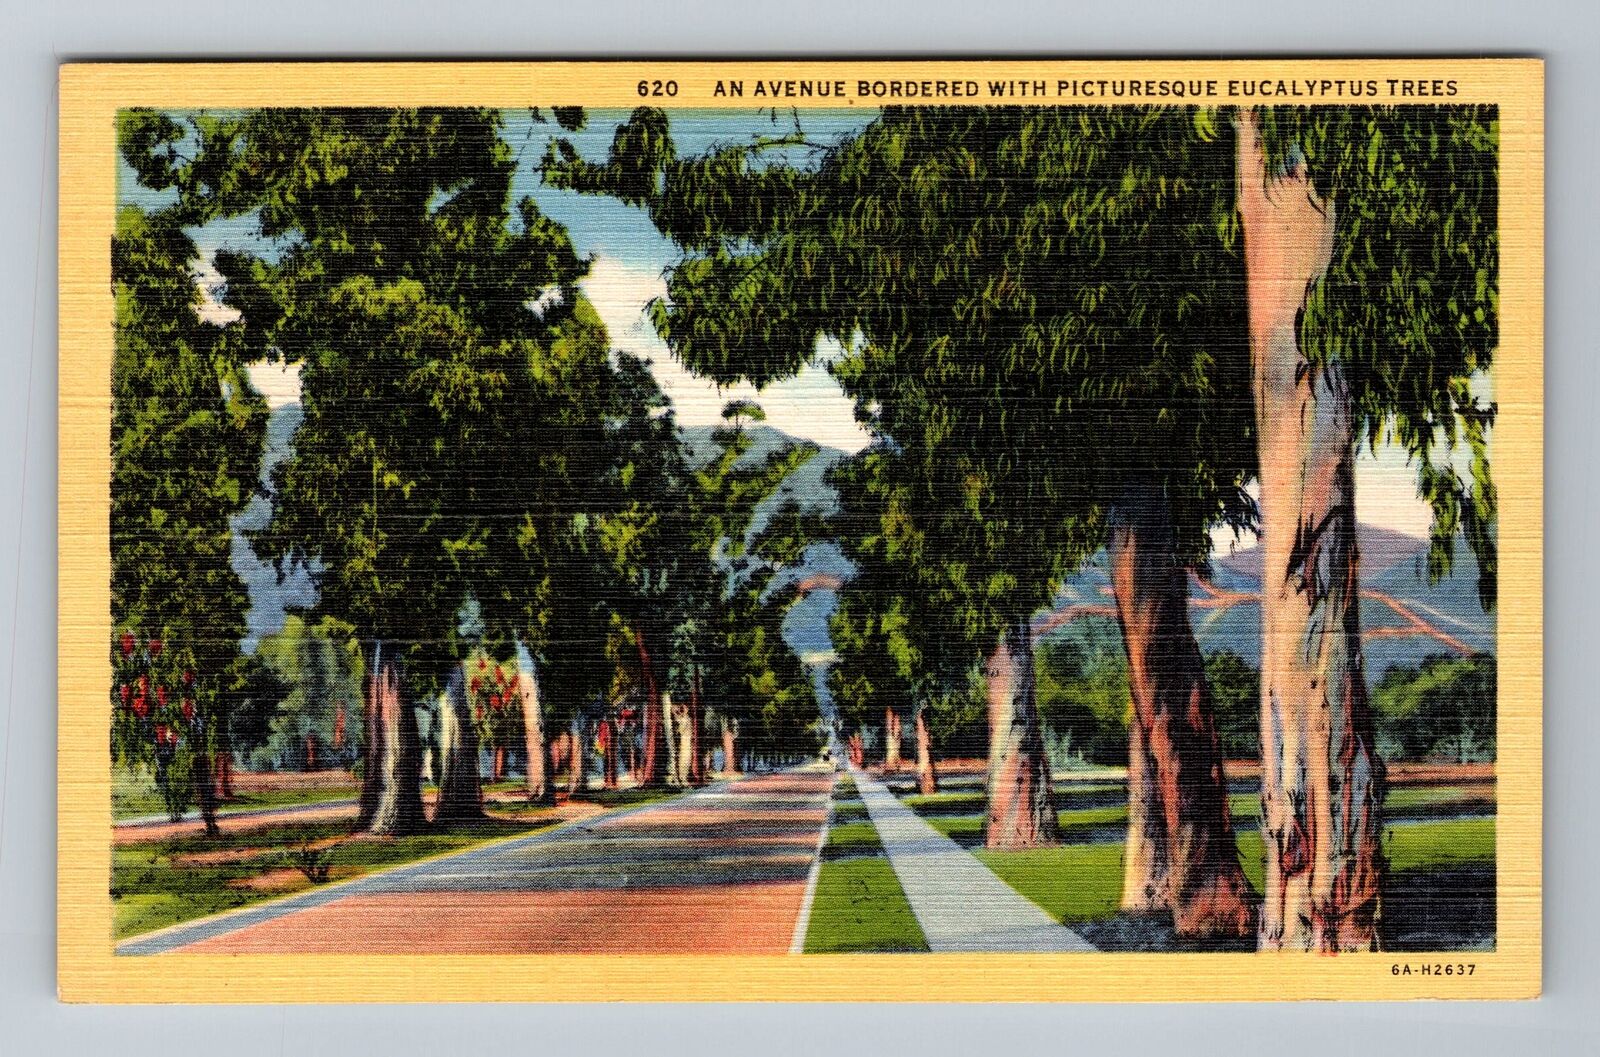 An Avenue In California Bordered With Eucalyptus Trees Vintage Souvenir Postcard